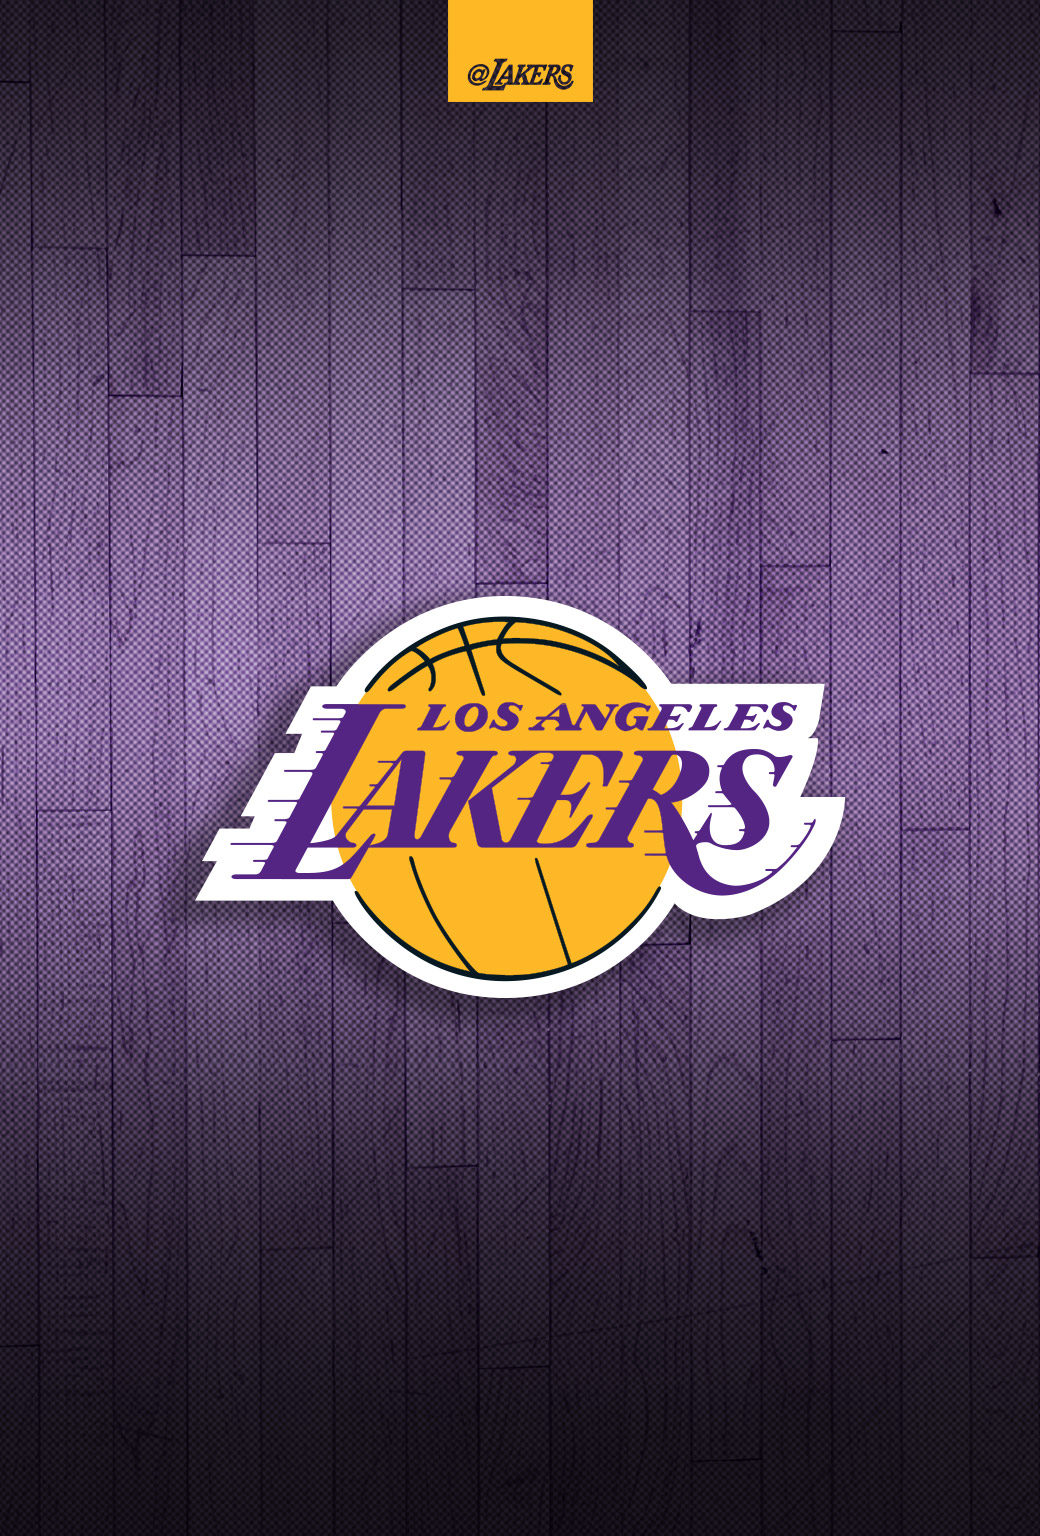 Lakers Logo Wallpapers | PixelsTalk.Net